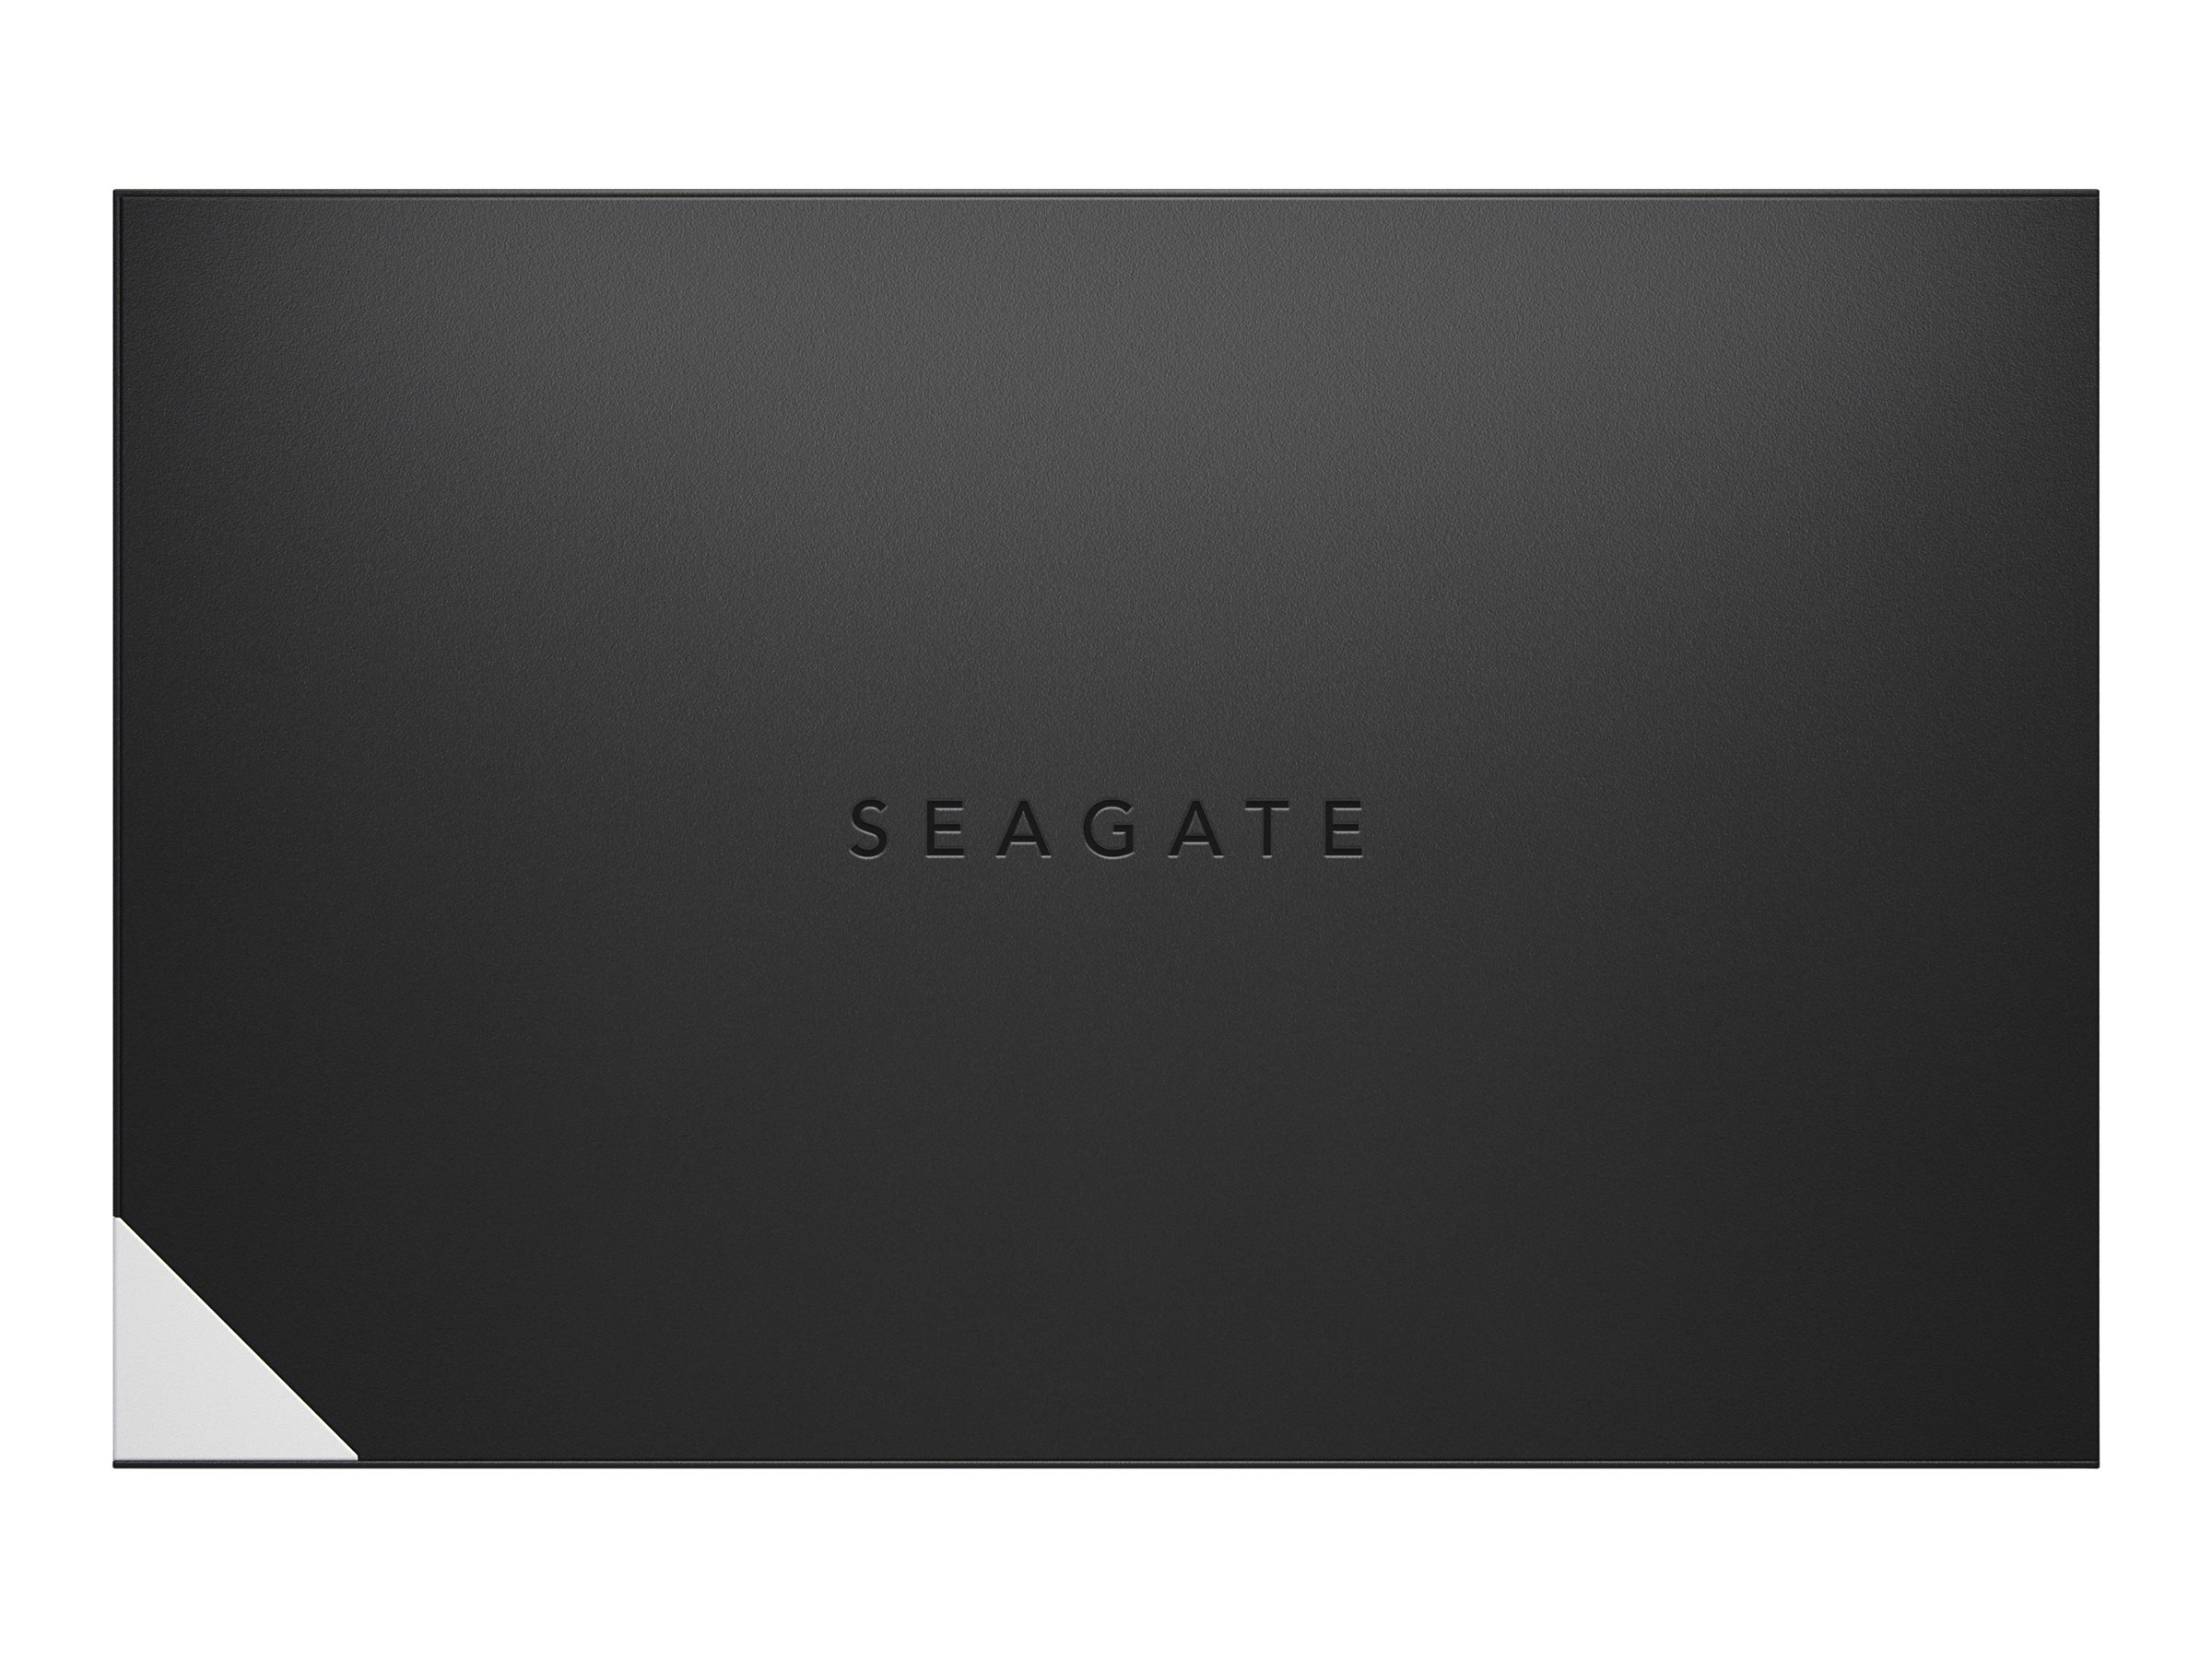 Seagate One Touch with hub STLC8000400 - Festplatte - 8 TB - extern (Stationär) - USB 3.0 - Schwarz